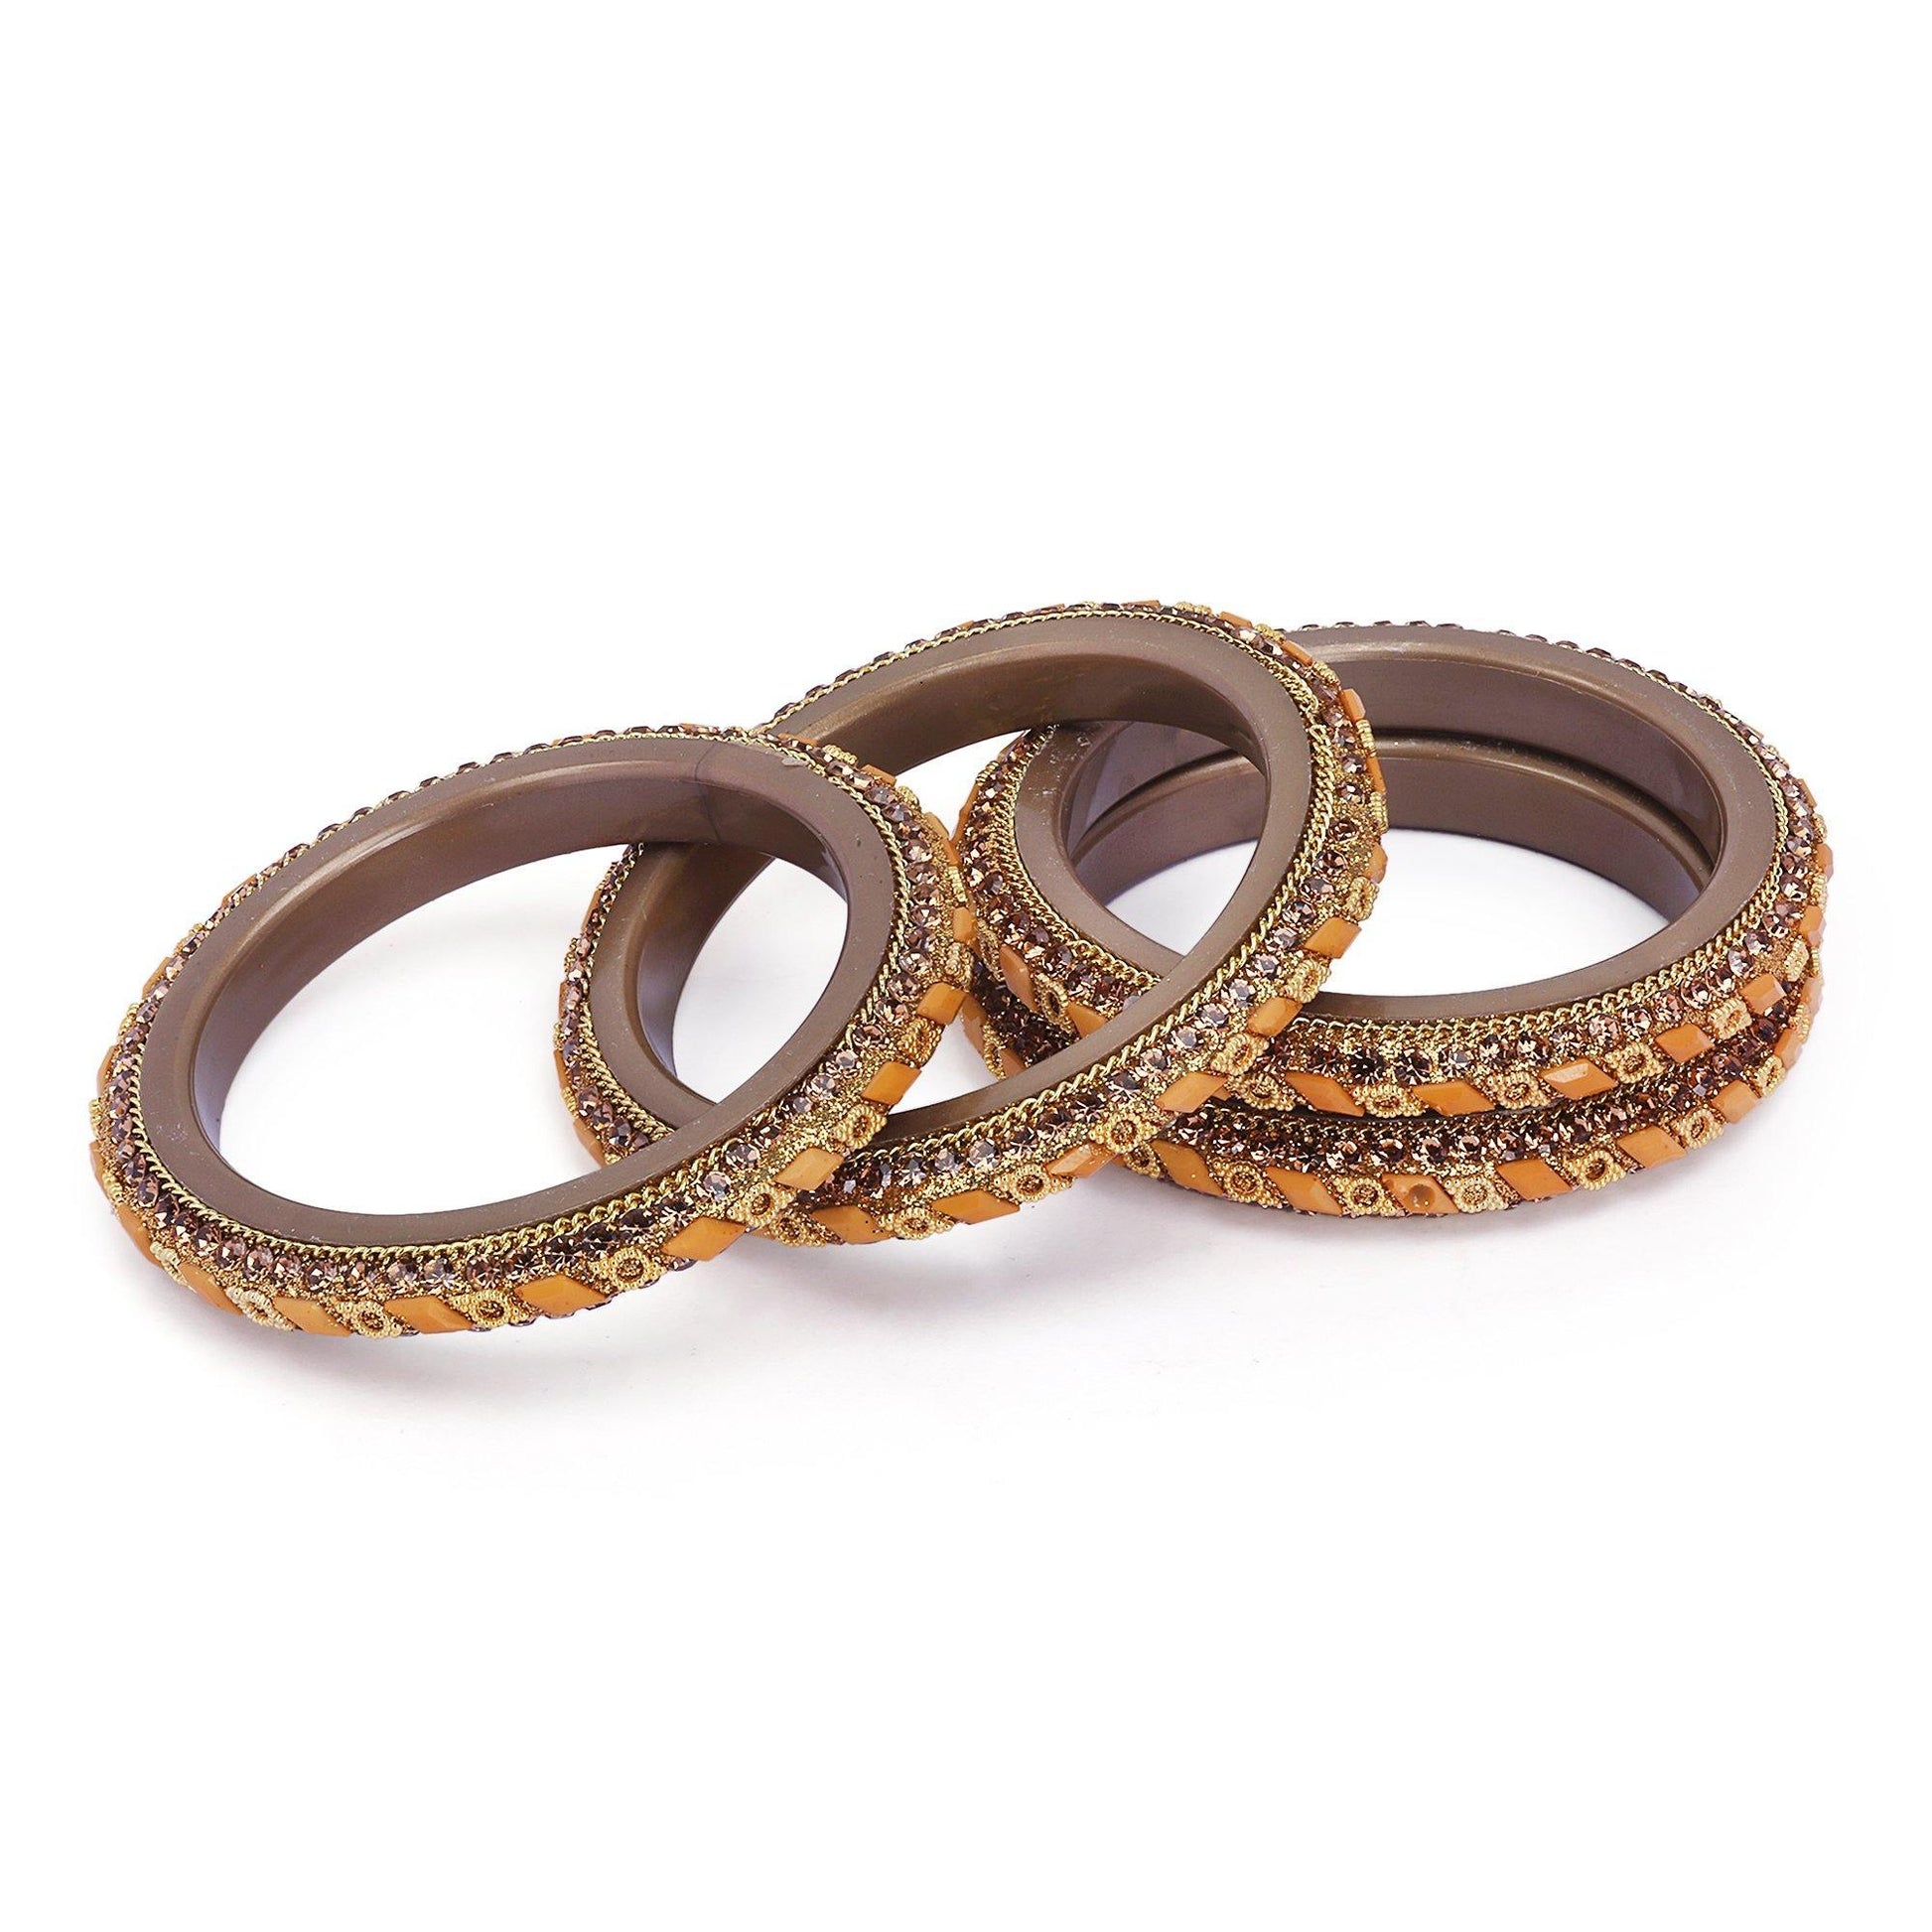 sukriti rajasthani contemporary golden kada seep acrylic bangles for girls & women – set of 4